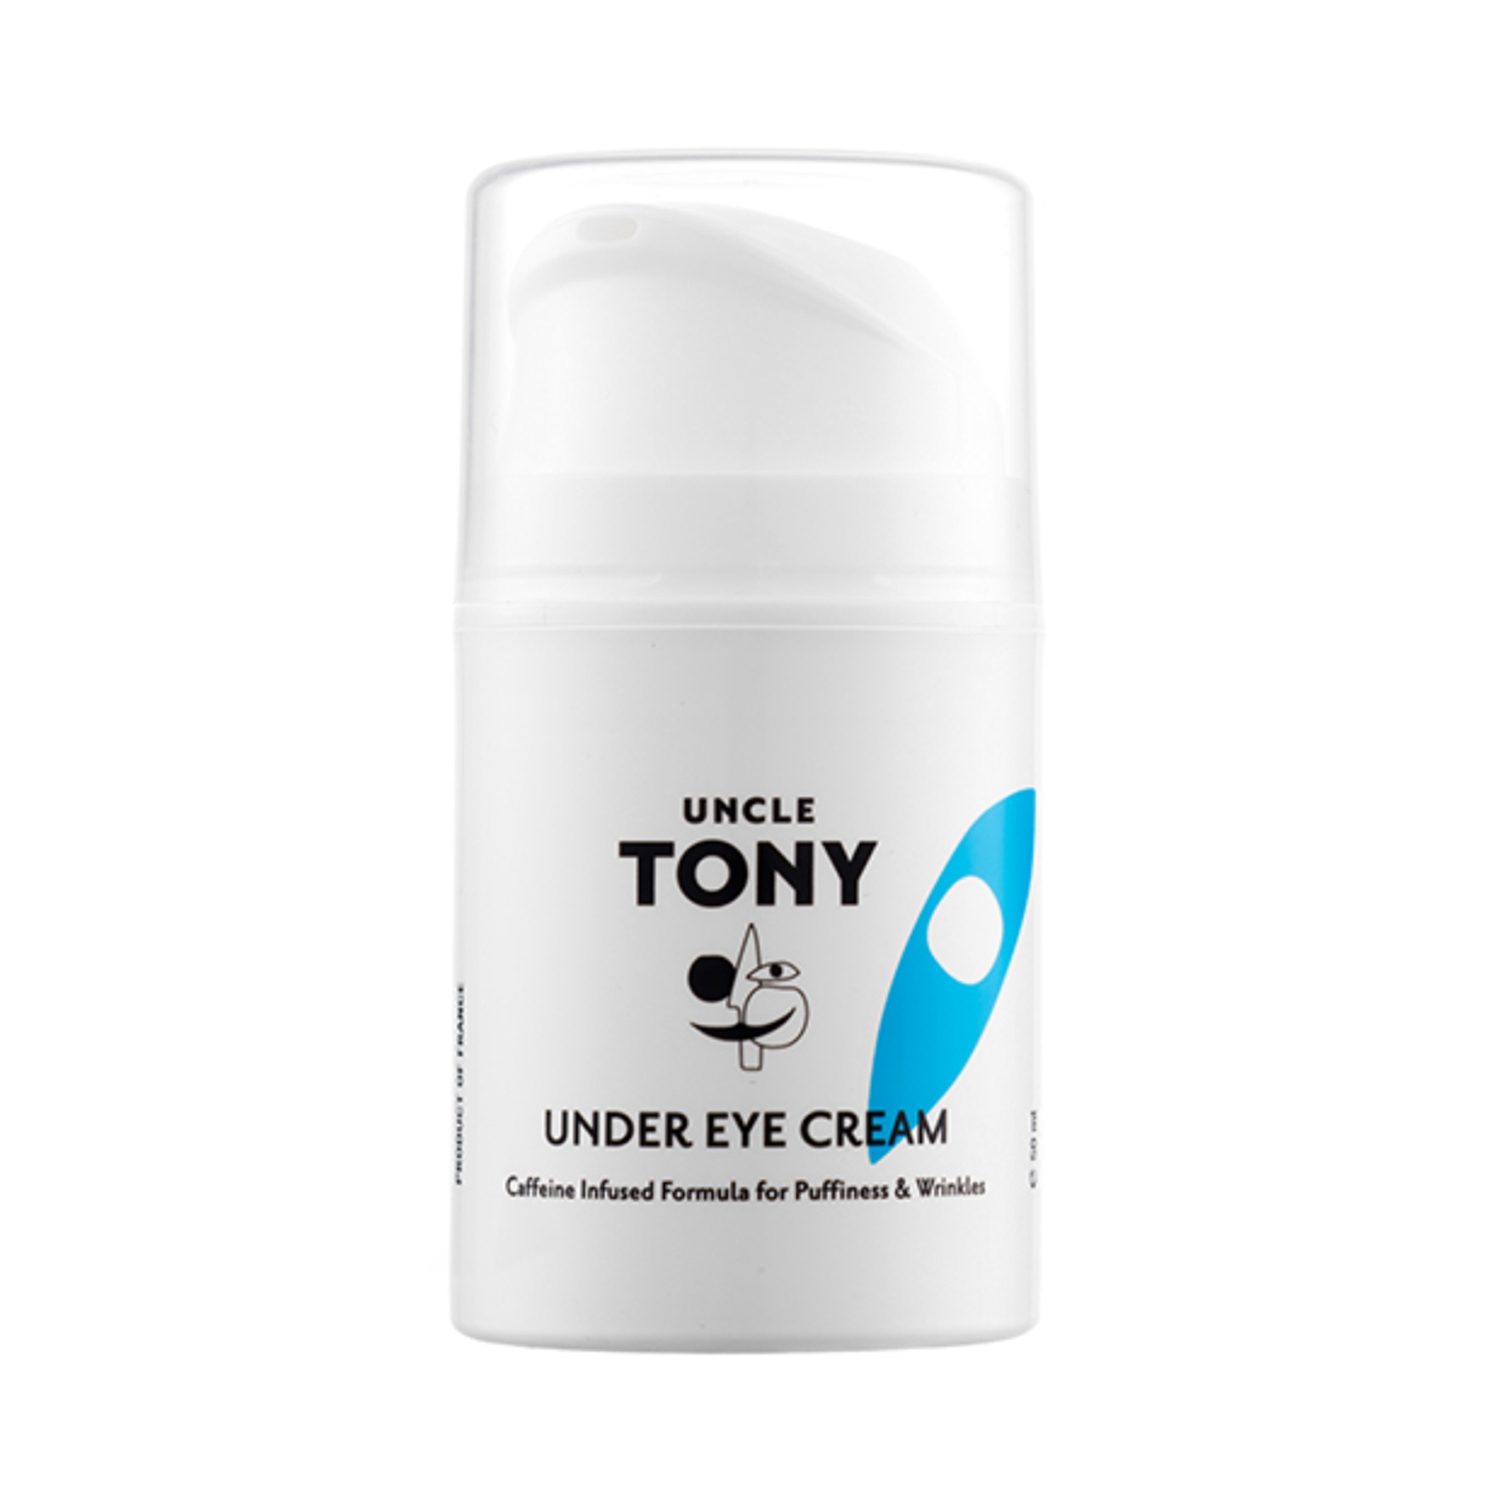 Uncle Tony Under Eye Cream (50ml)